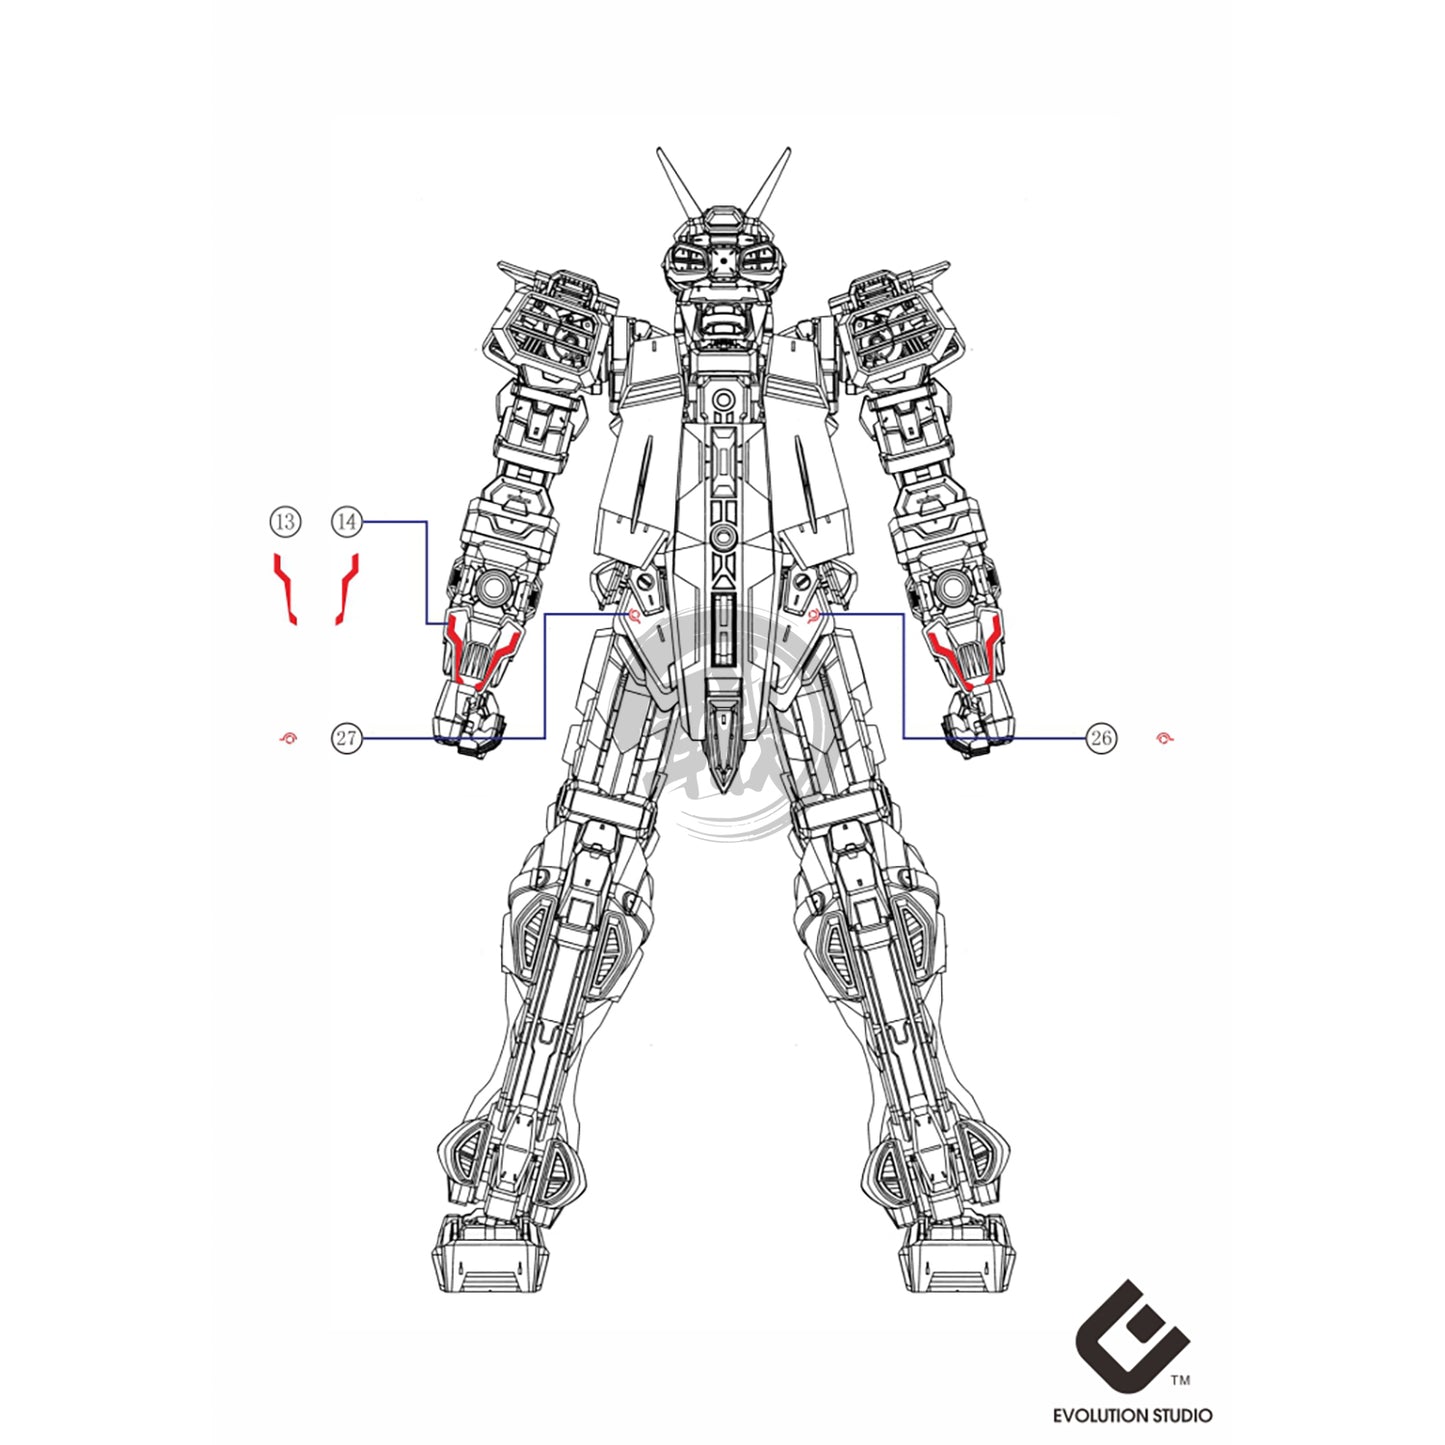 EVO Studio - HIRM Style Gundam Astray Red Frame Kai Waterslide Decals [Fluorescent] - ShokuninGunpla